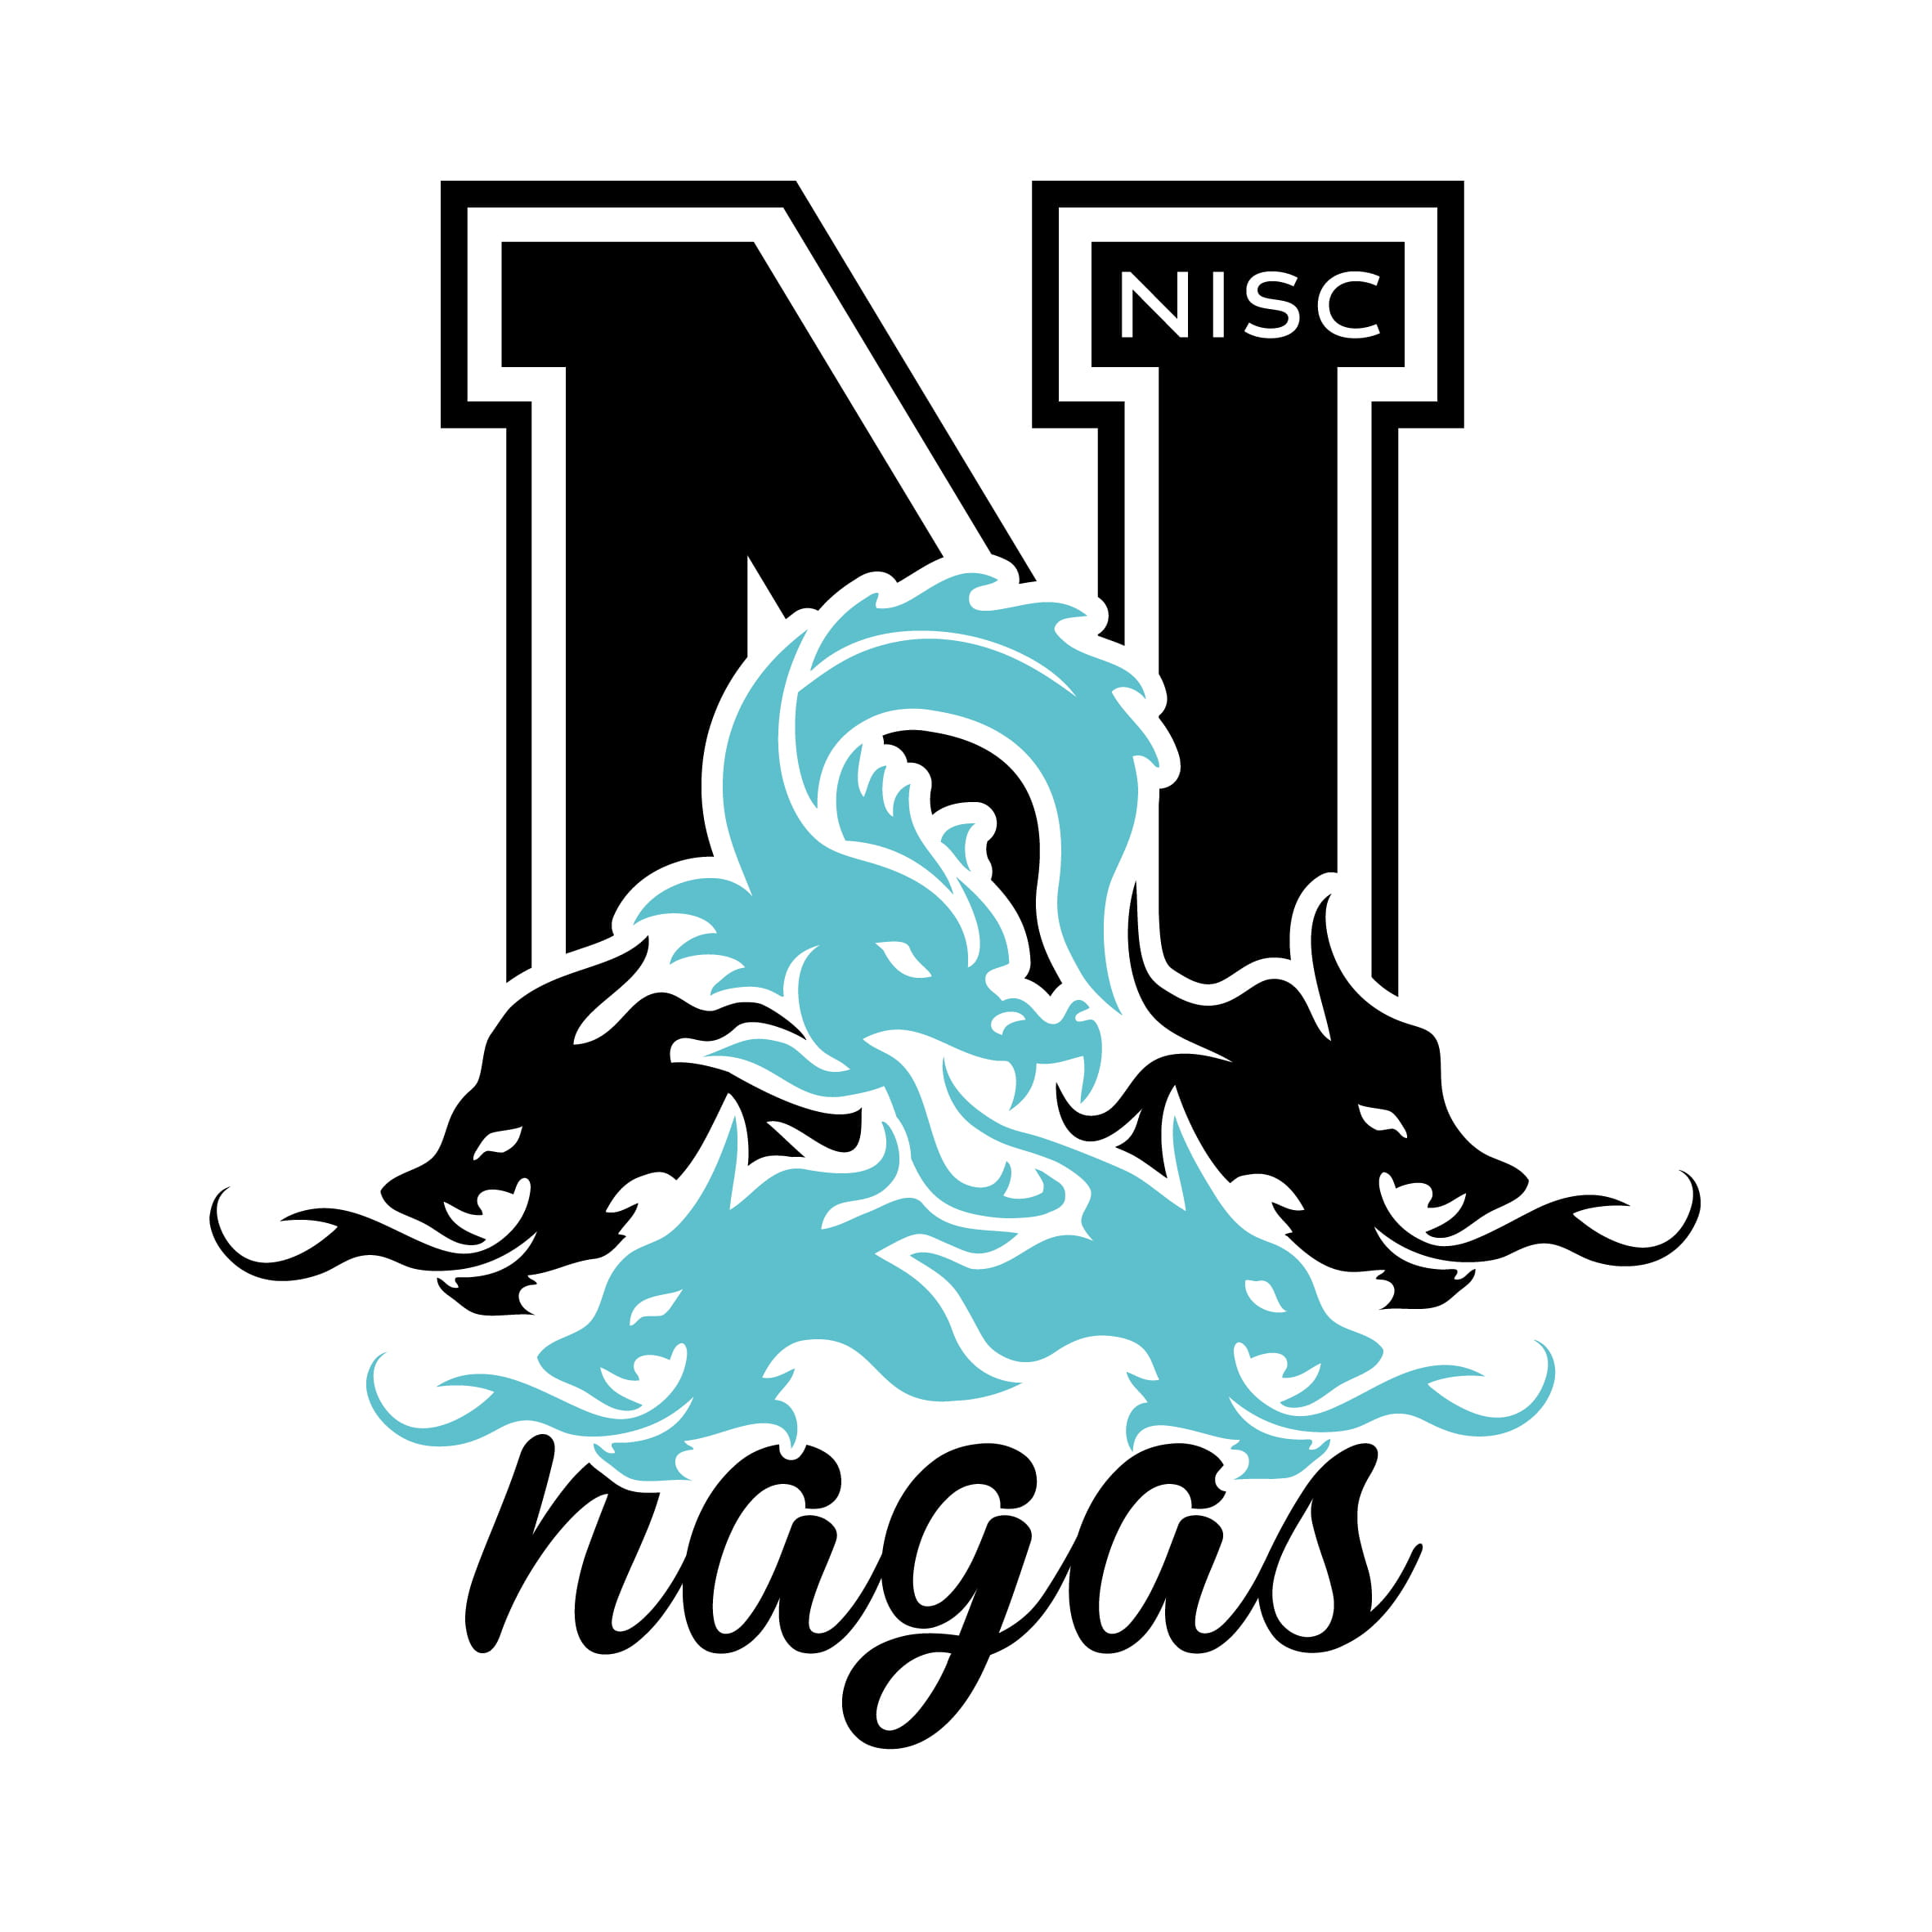 Nagas swim team win medals at ISSAPP meet - nagas-swim-team-win-medals-at-issapp-meet